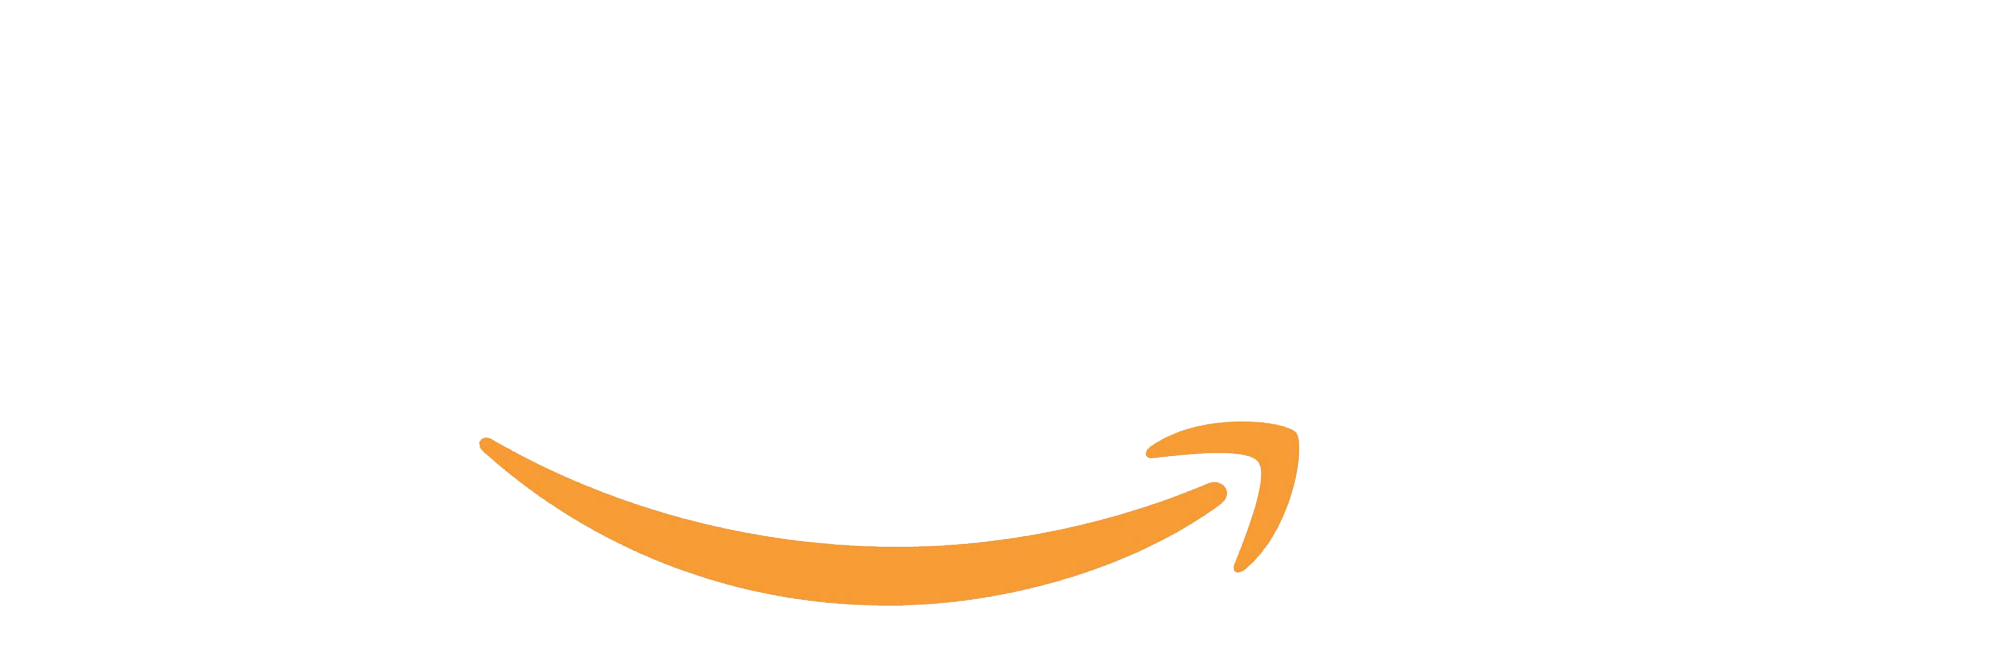 DJ Herzbeat bei Amazon kaufen